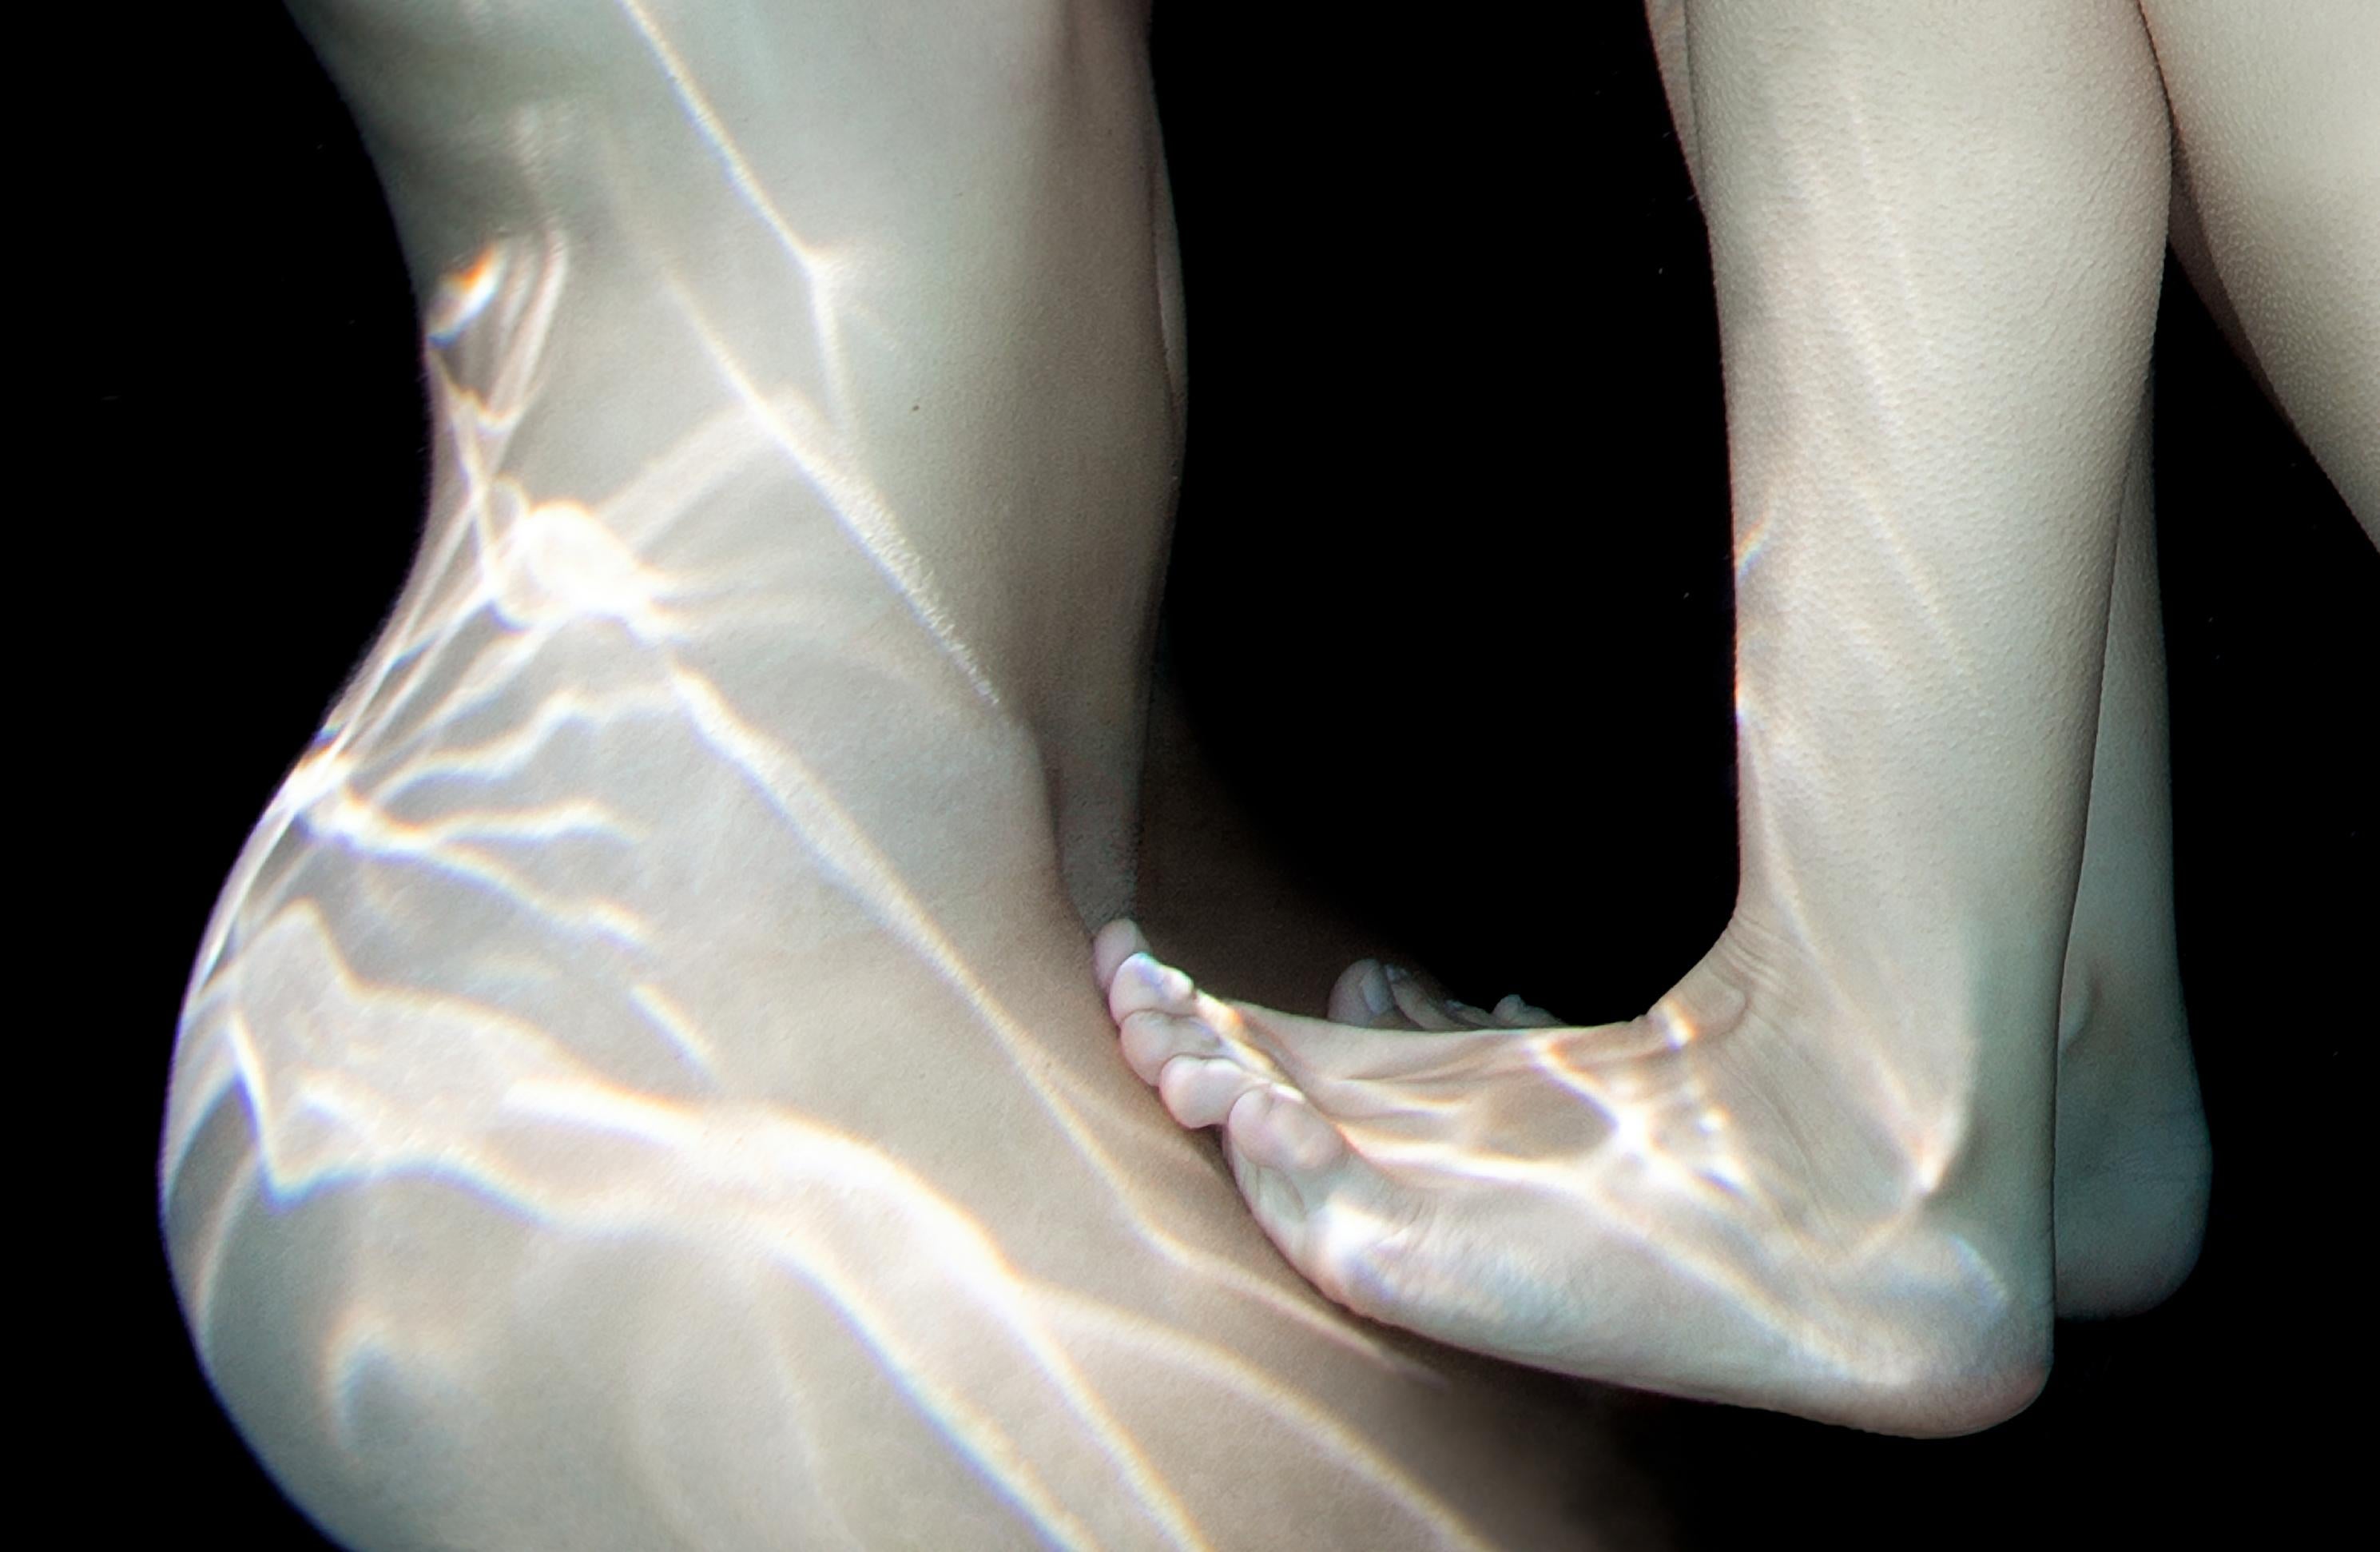 Porcelain  - underwater nude photograph - archival pigment print 24